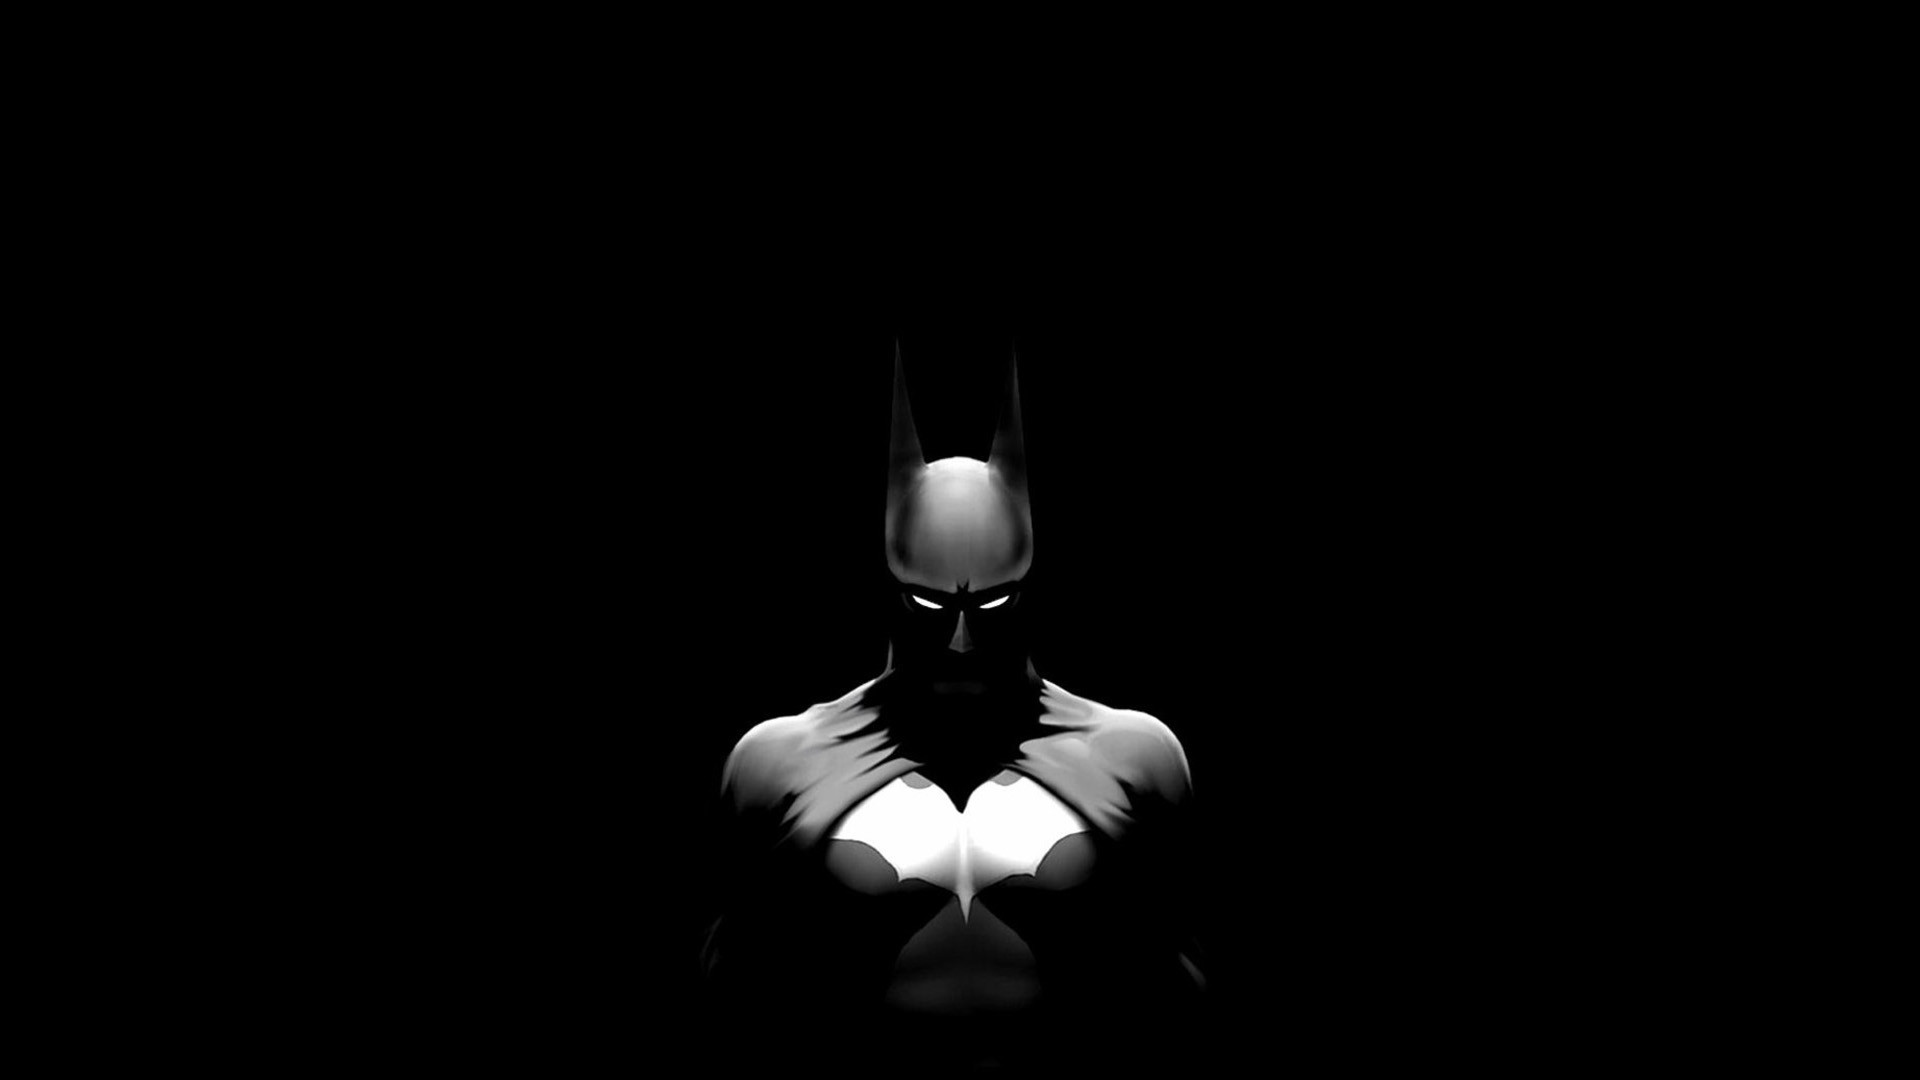 1920x1080 Batman HD Wallpapers at http://www.hdwallcloud.com/batman-